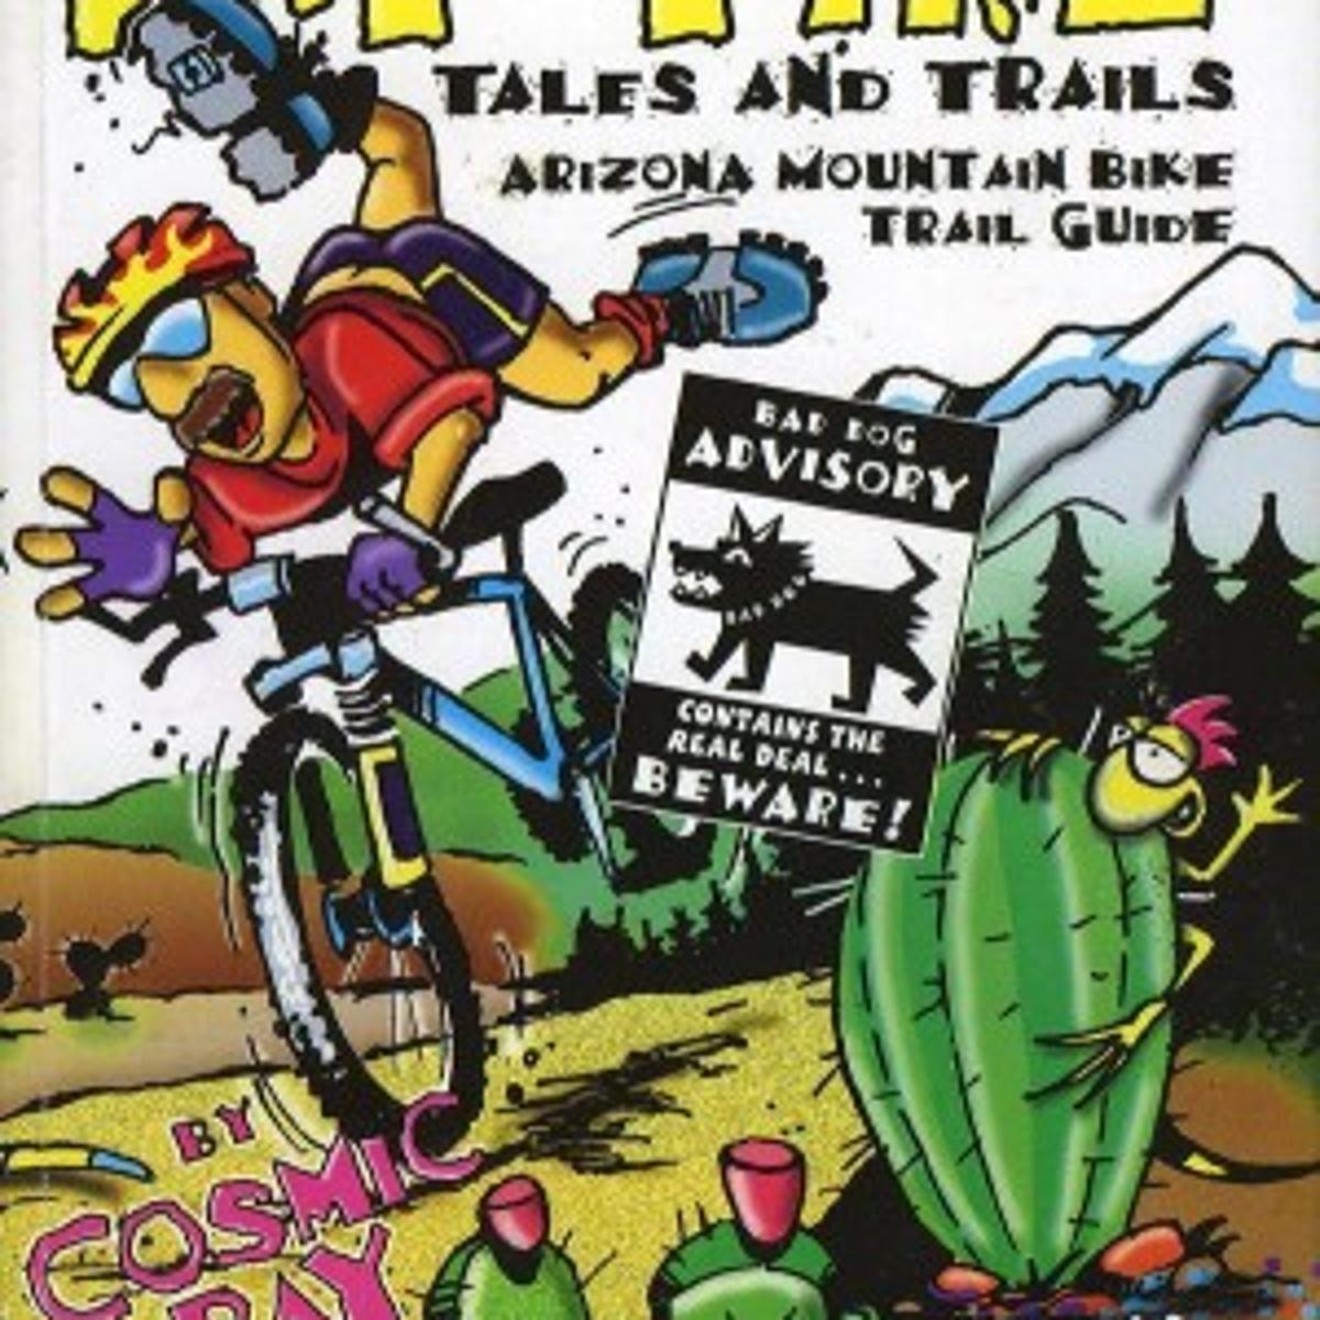 Brutti's entertaining guides to Arizona mountain biking and hiking are still classics.